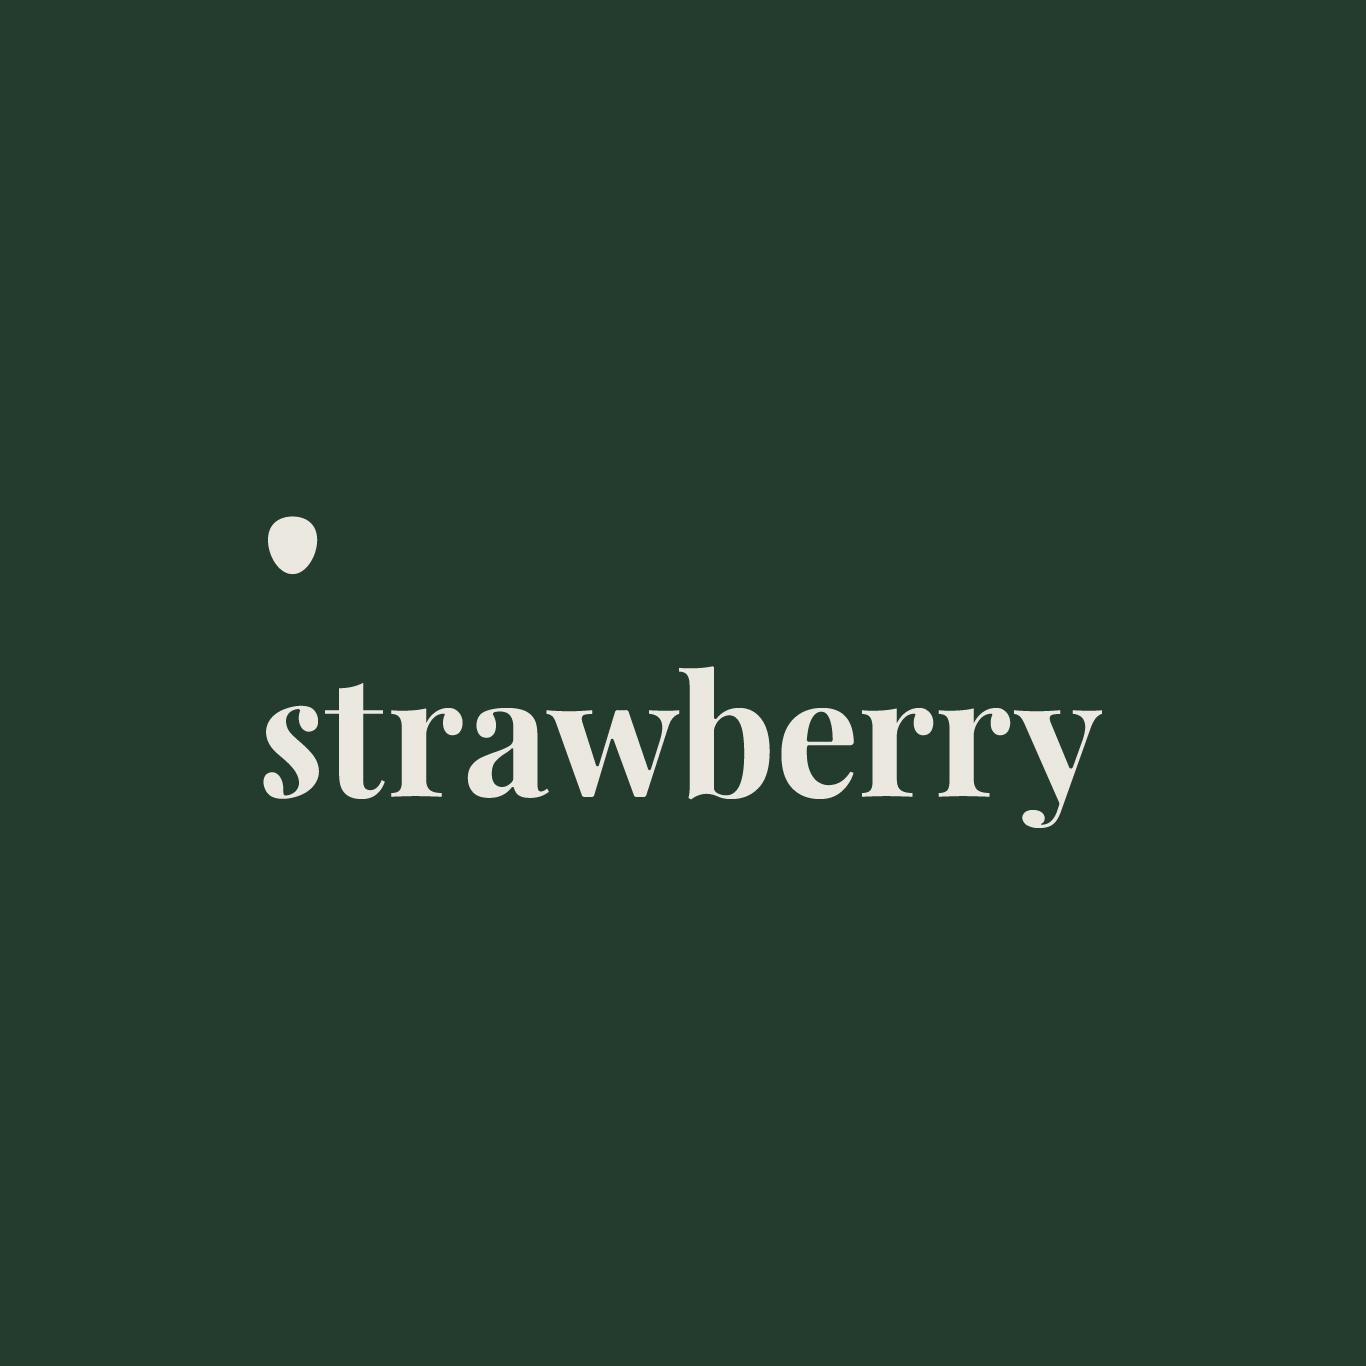 Strawberry Brand Studio profile on Qualified.One